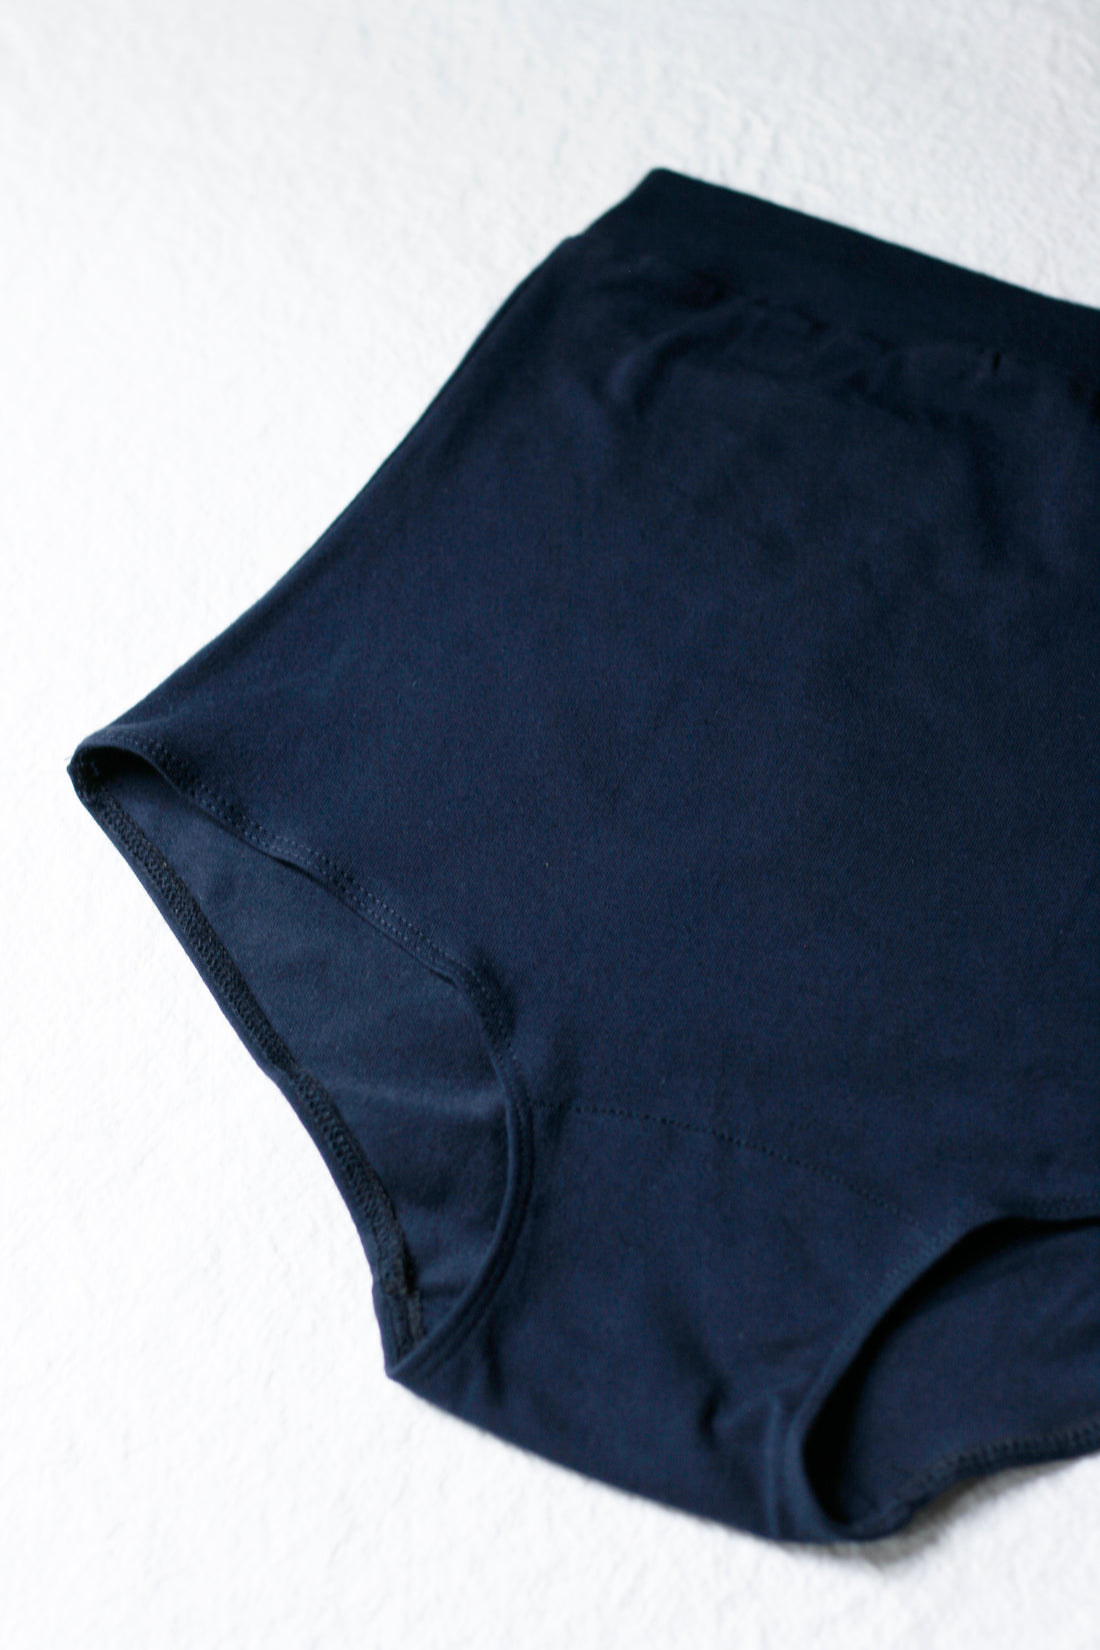 Fashion (B-Black)High Waist Thermal Panties For Women Flat Belly